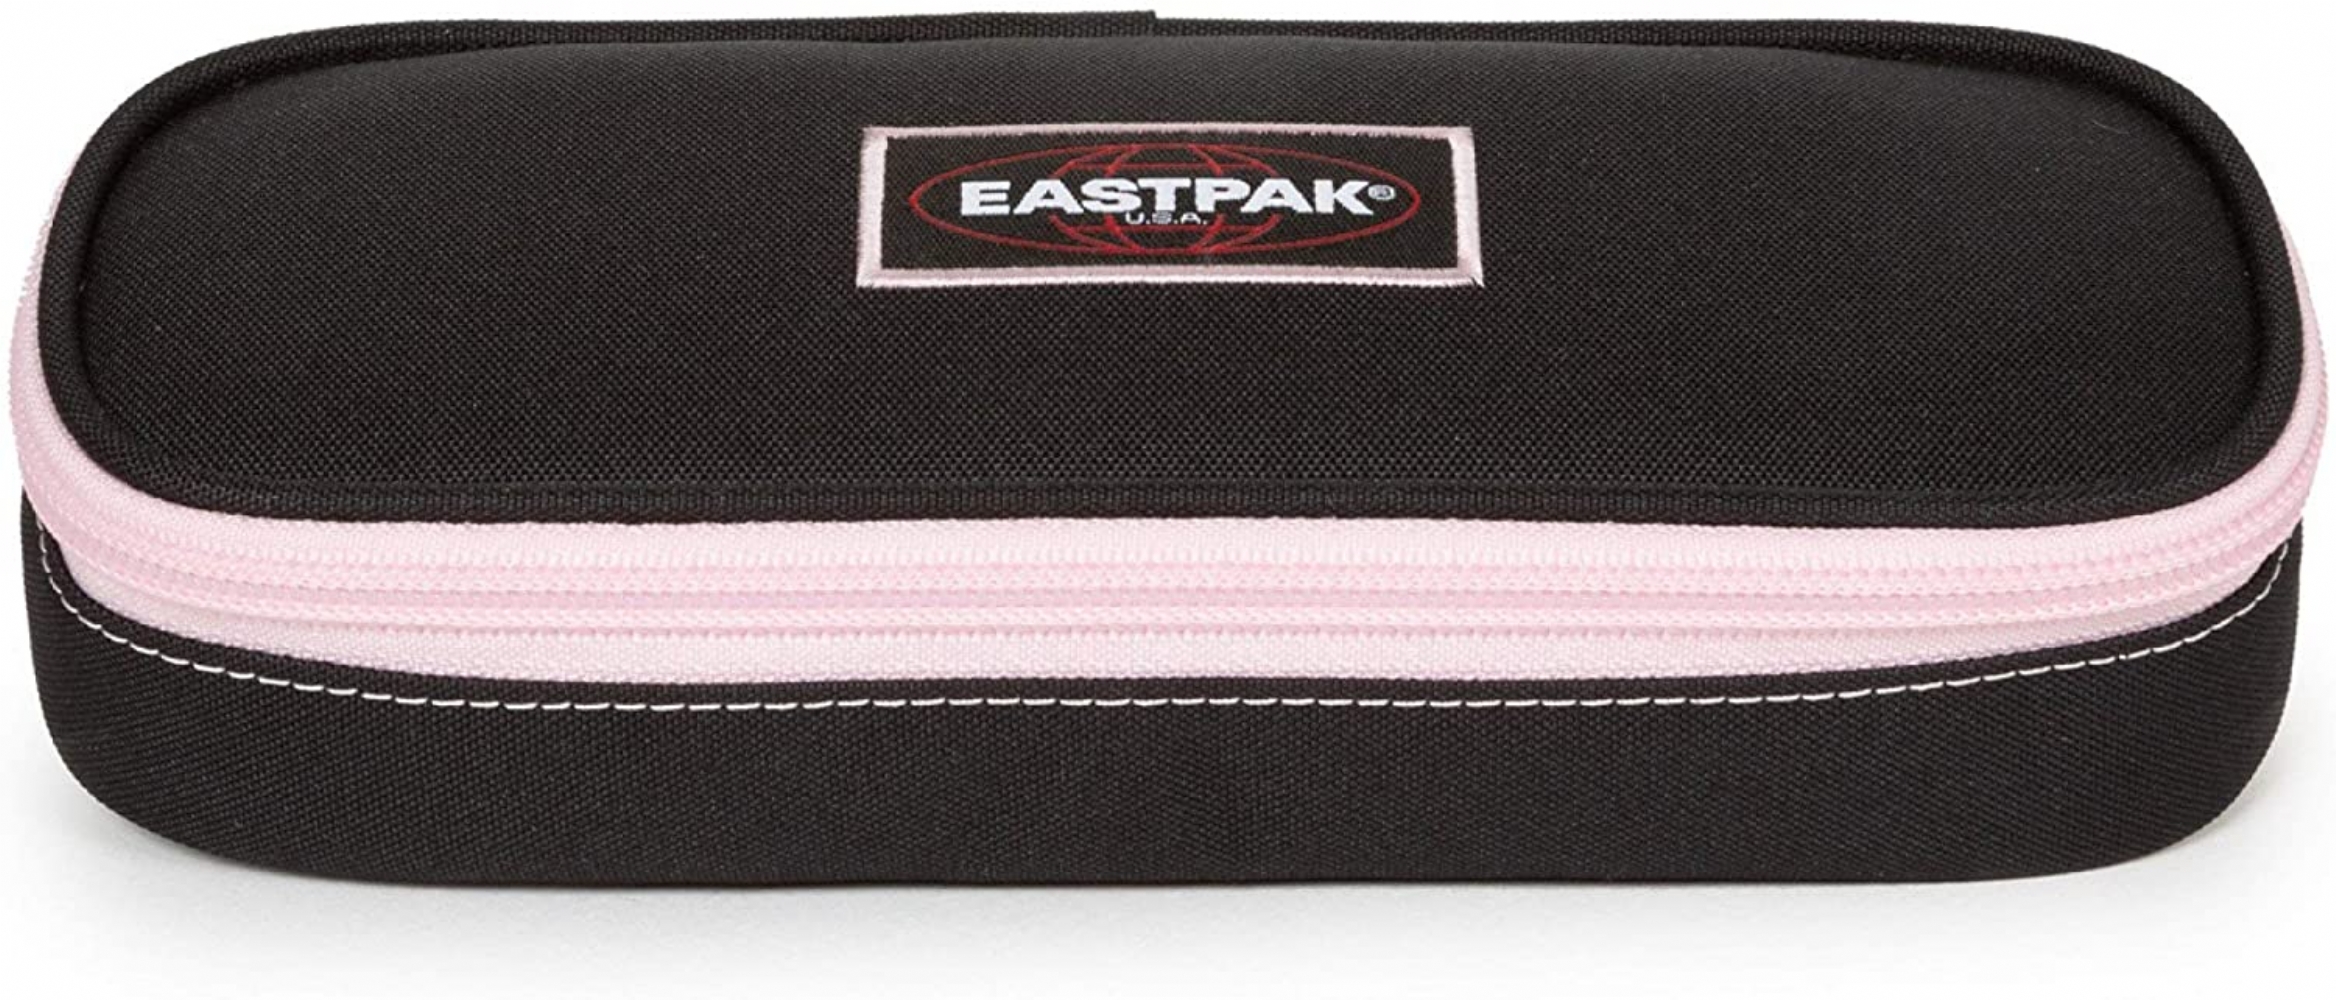 Eastpak - Astuccio Oval Single I85 - Kontrast - Colore Nero Rosa chiaro